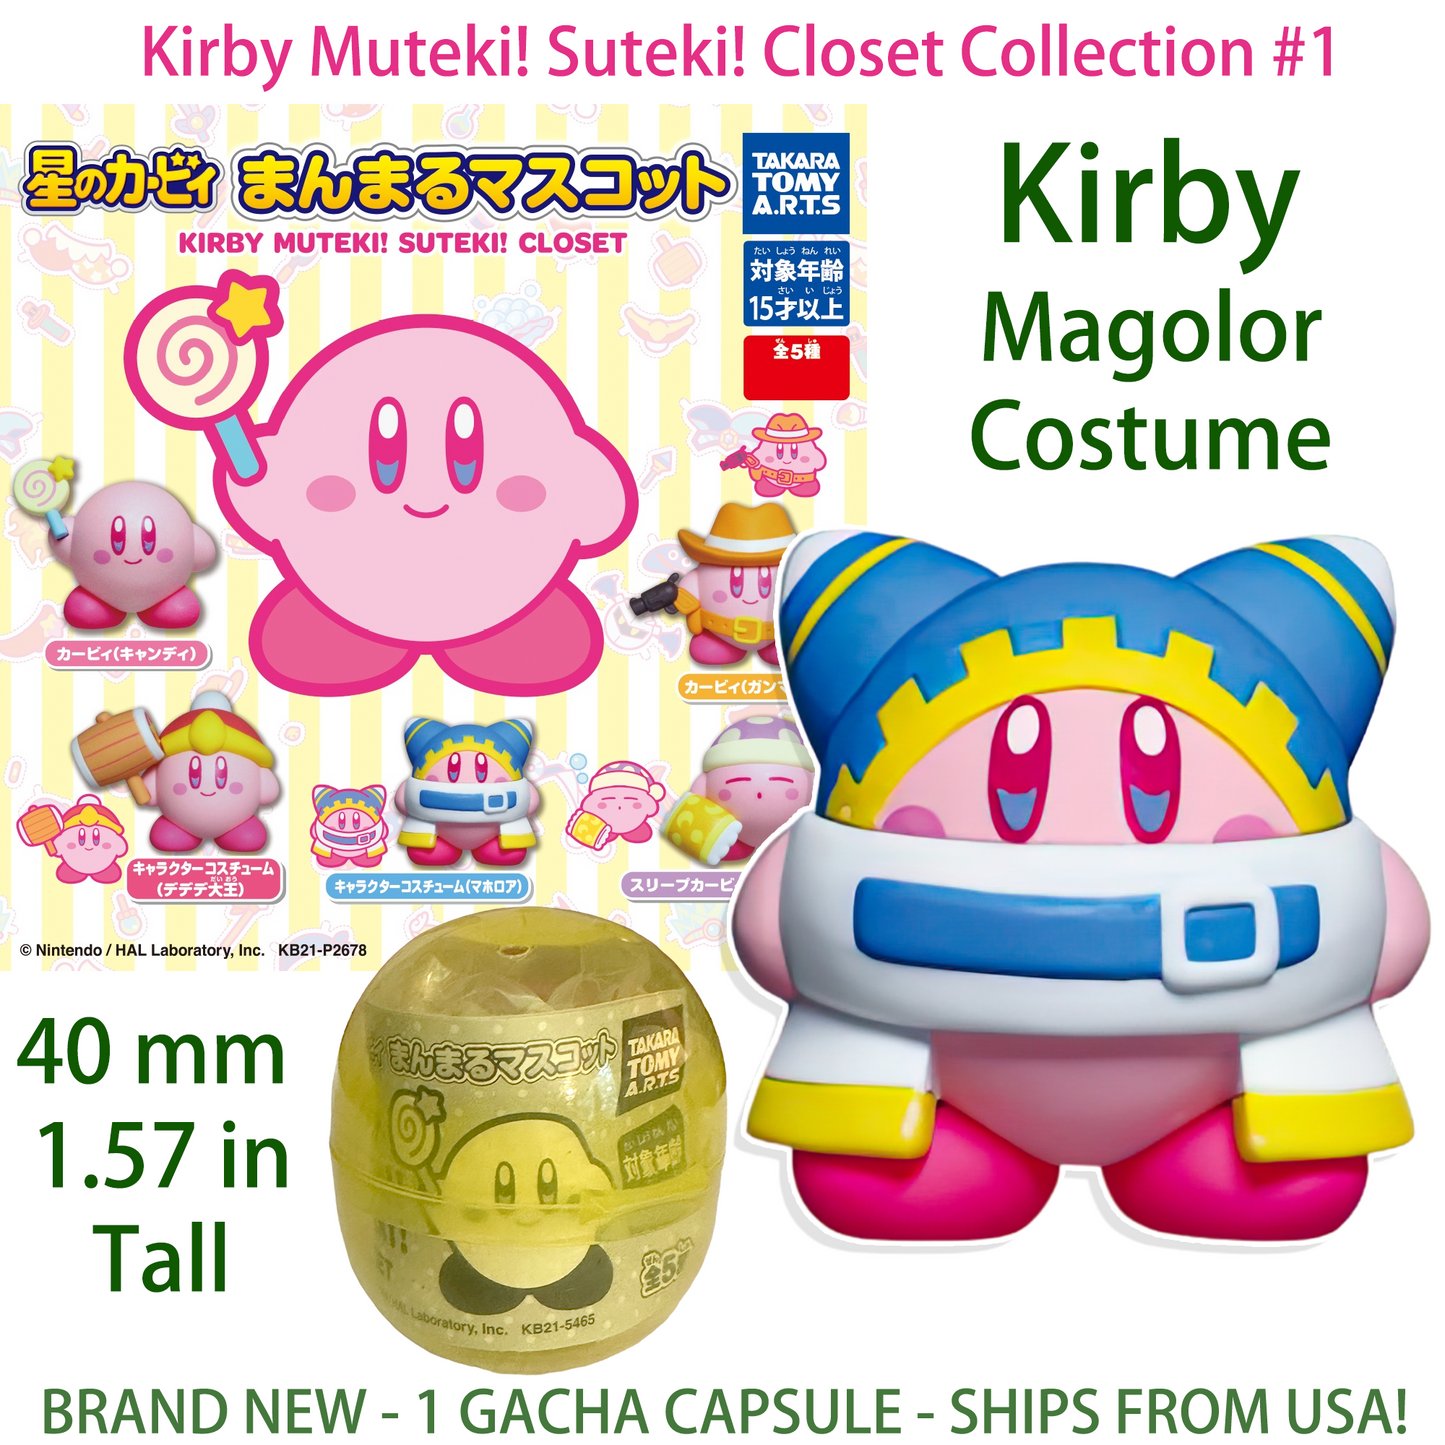 KIRBY MAGOLOR COSTUME - KIRBY'S SUTEKI! MUTEKI! Gashapon Capsule Figure (NEW)